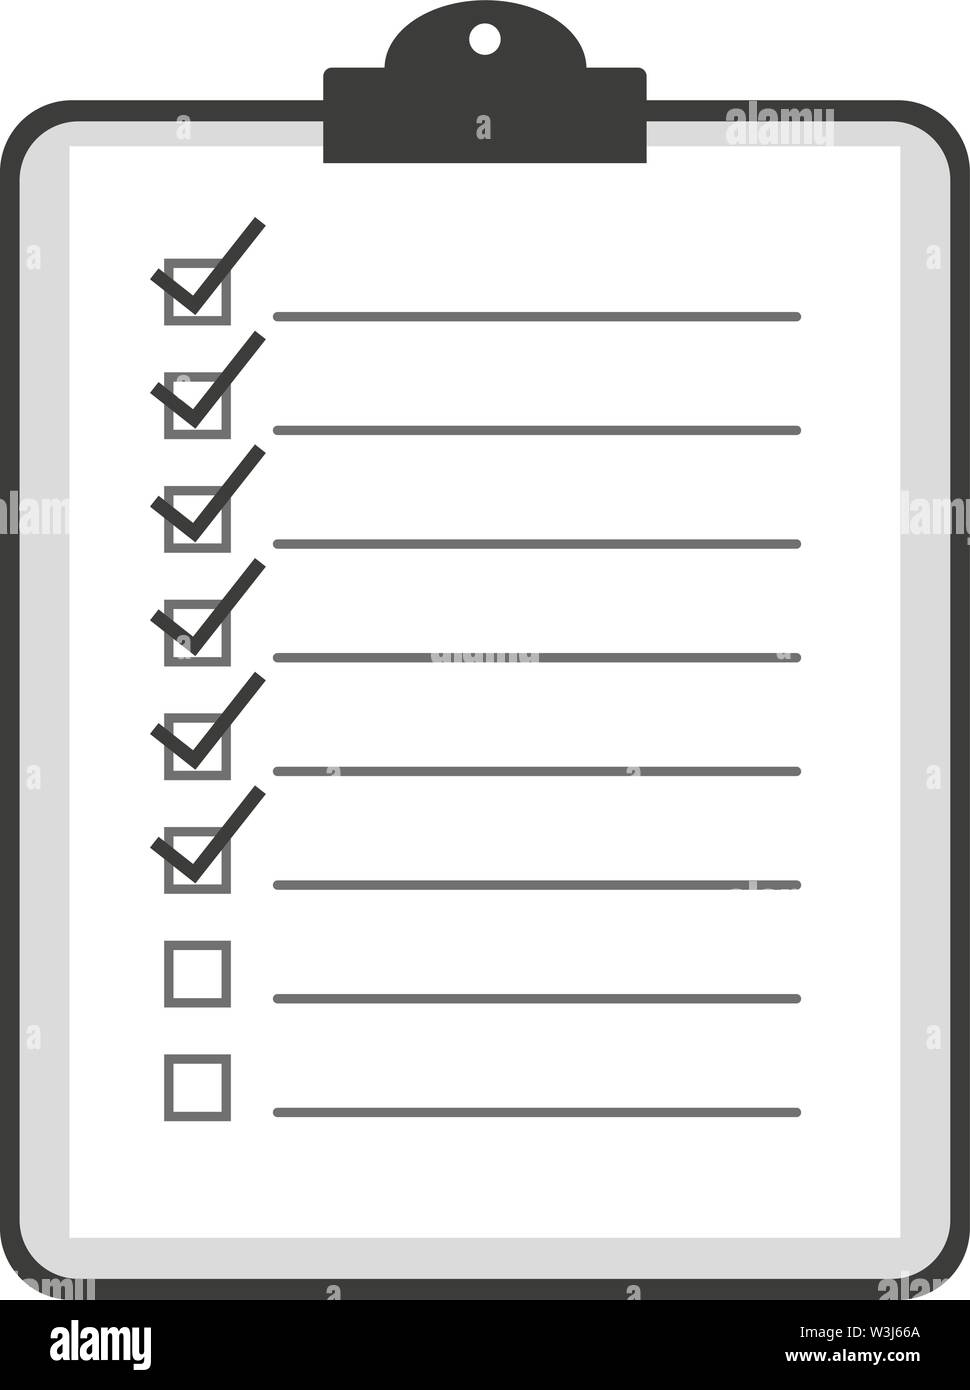 checklist on clipboard icon or symbol vector illustration Stock Vector